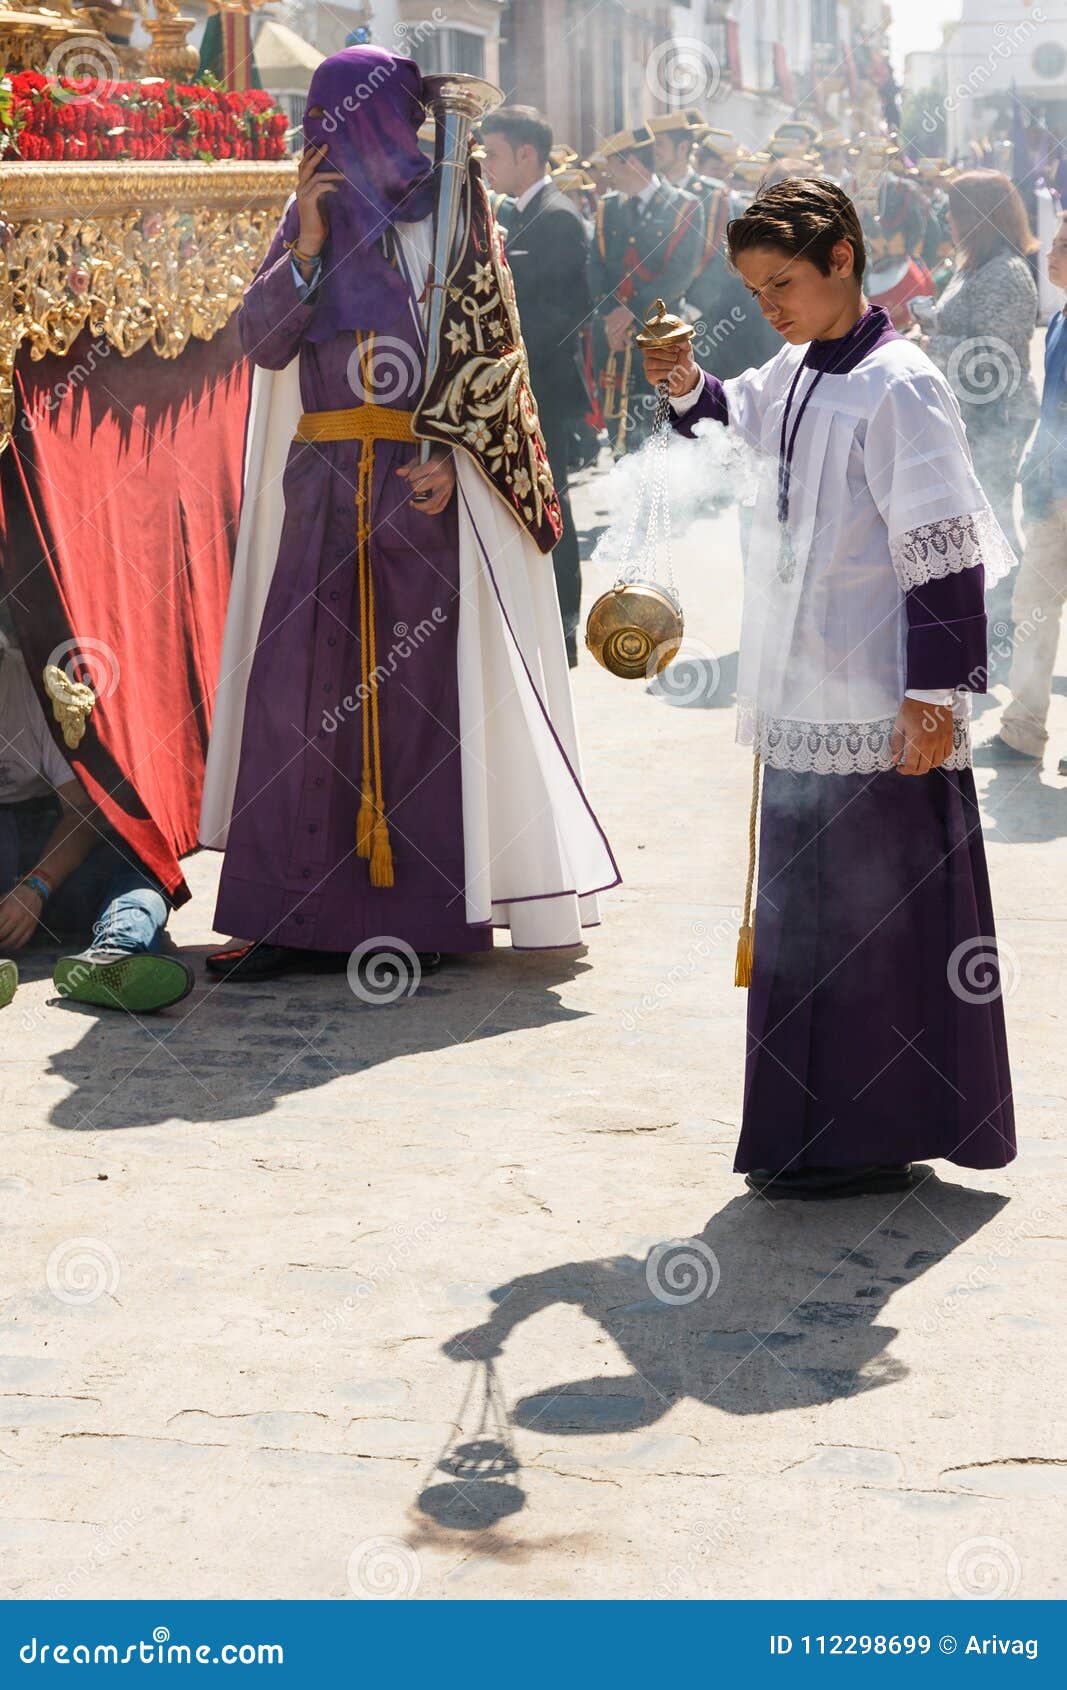 Objetos litúrgicos exhibidos en Semana Santa en Triana, casullas, incensario,  Sevilla, España Stock Photo